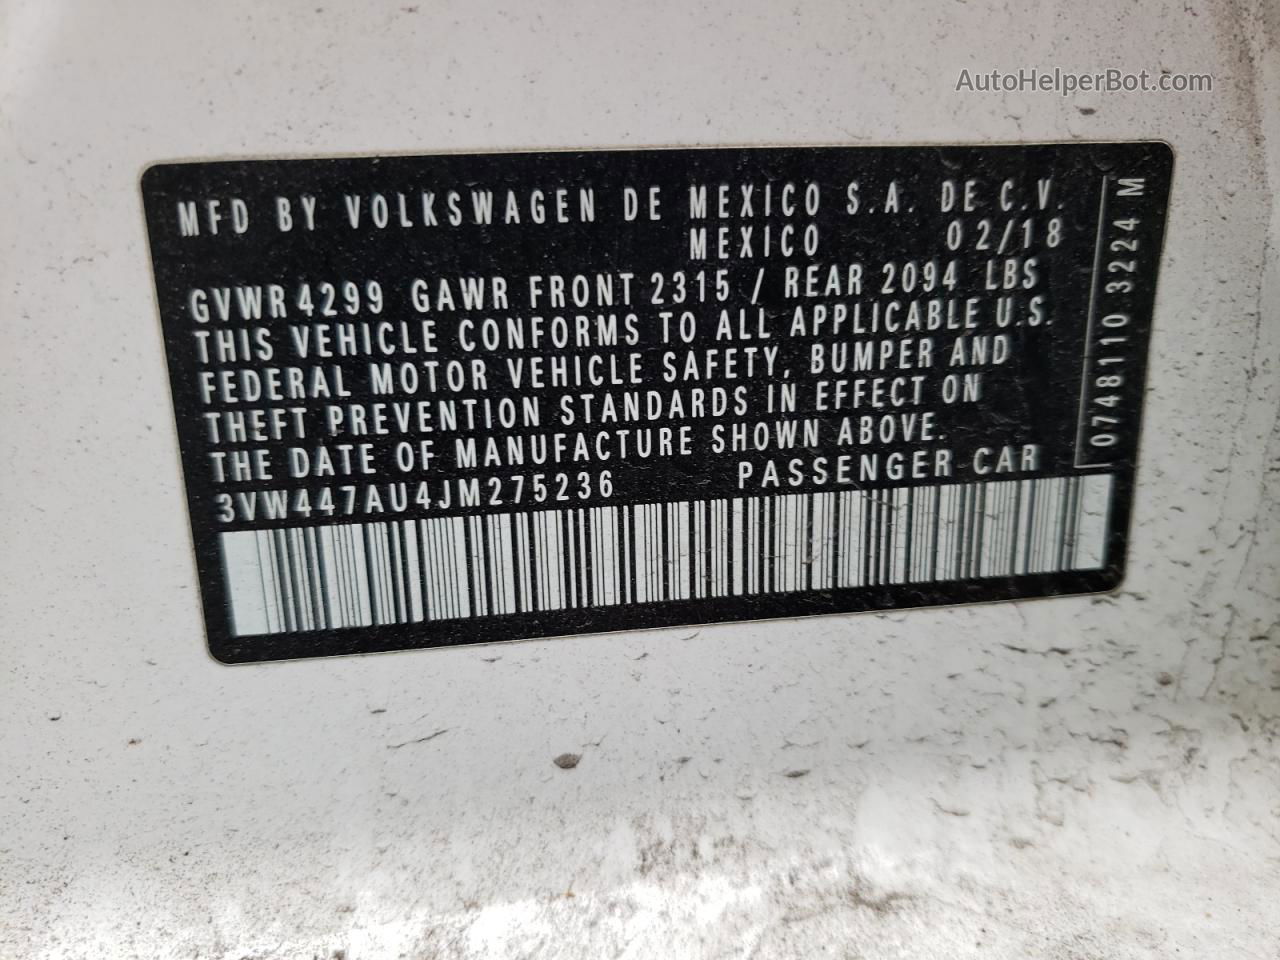 2018 Volkswagen Gti S/se White vin: 3VW447AU4JM275236